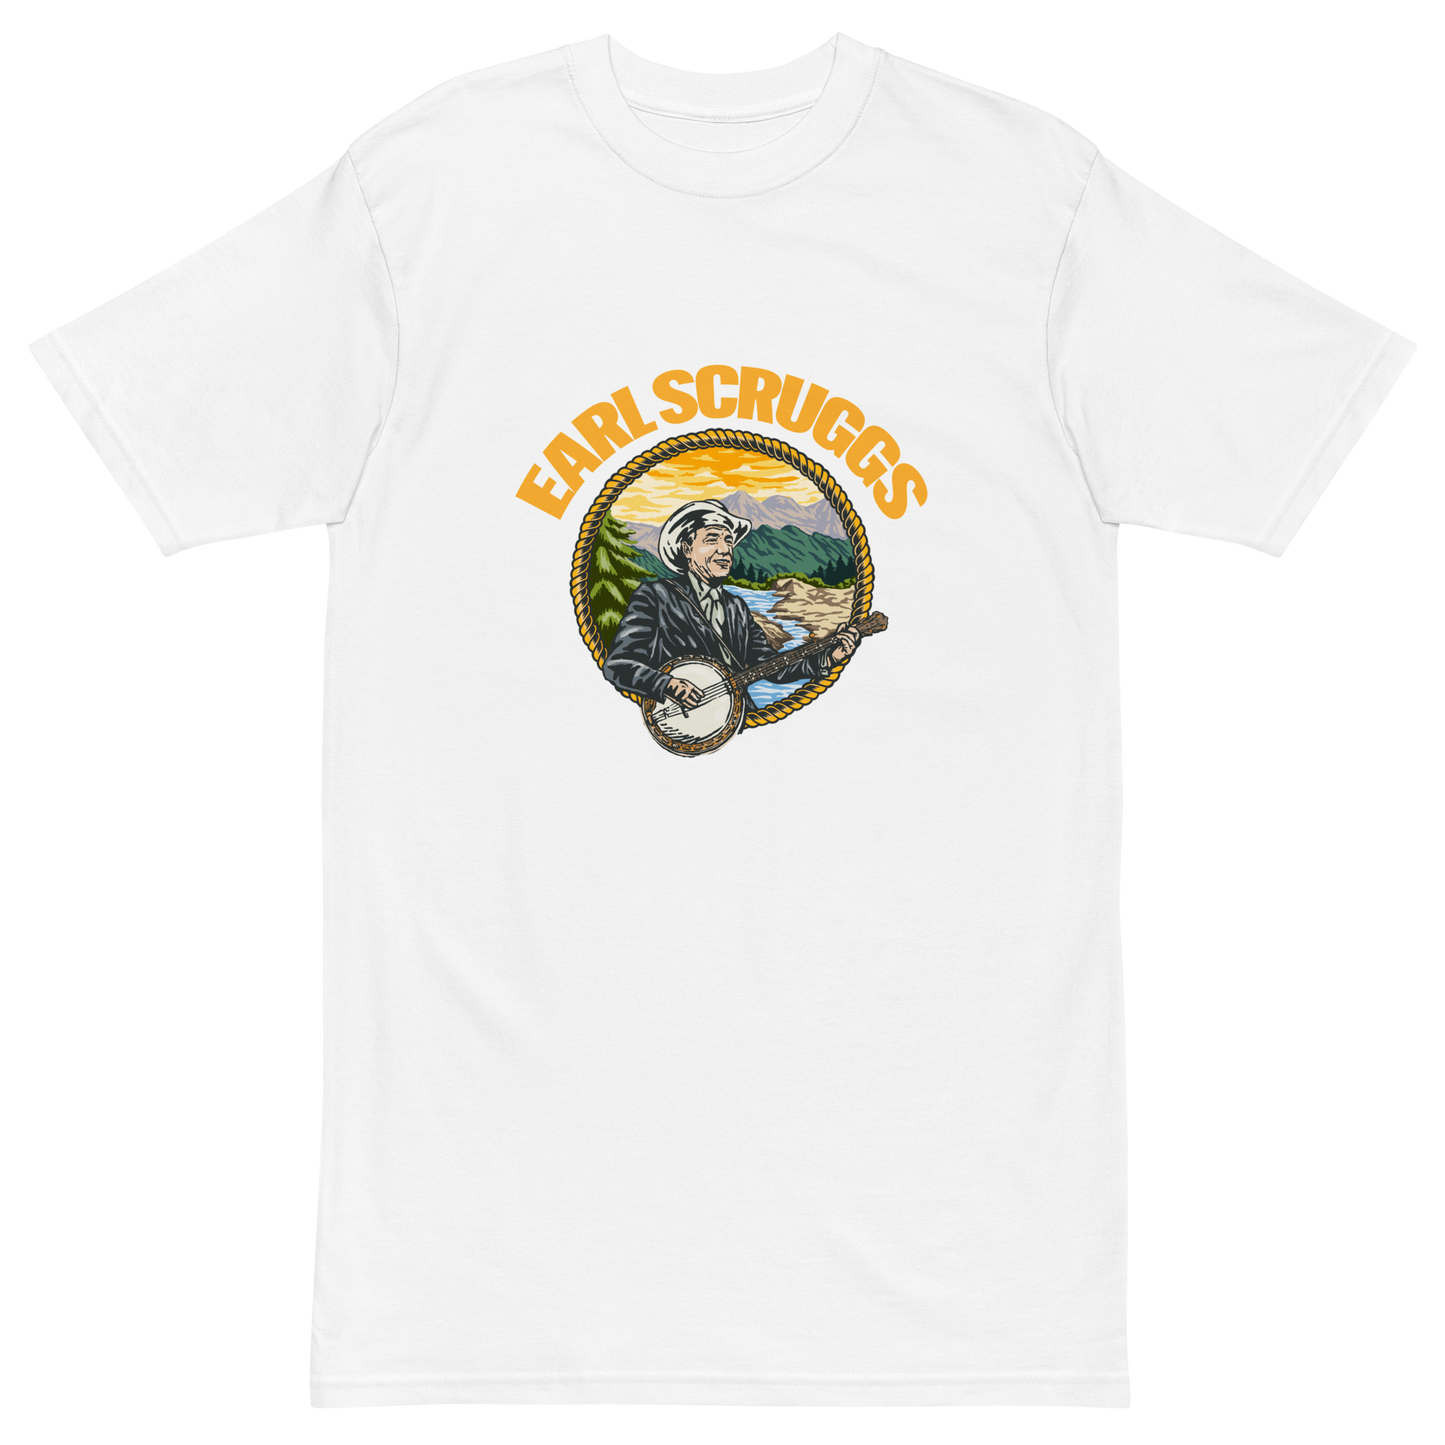 Earl Scruggs Tribute - Heavyweight T-Shirt